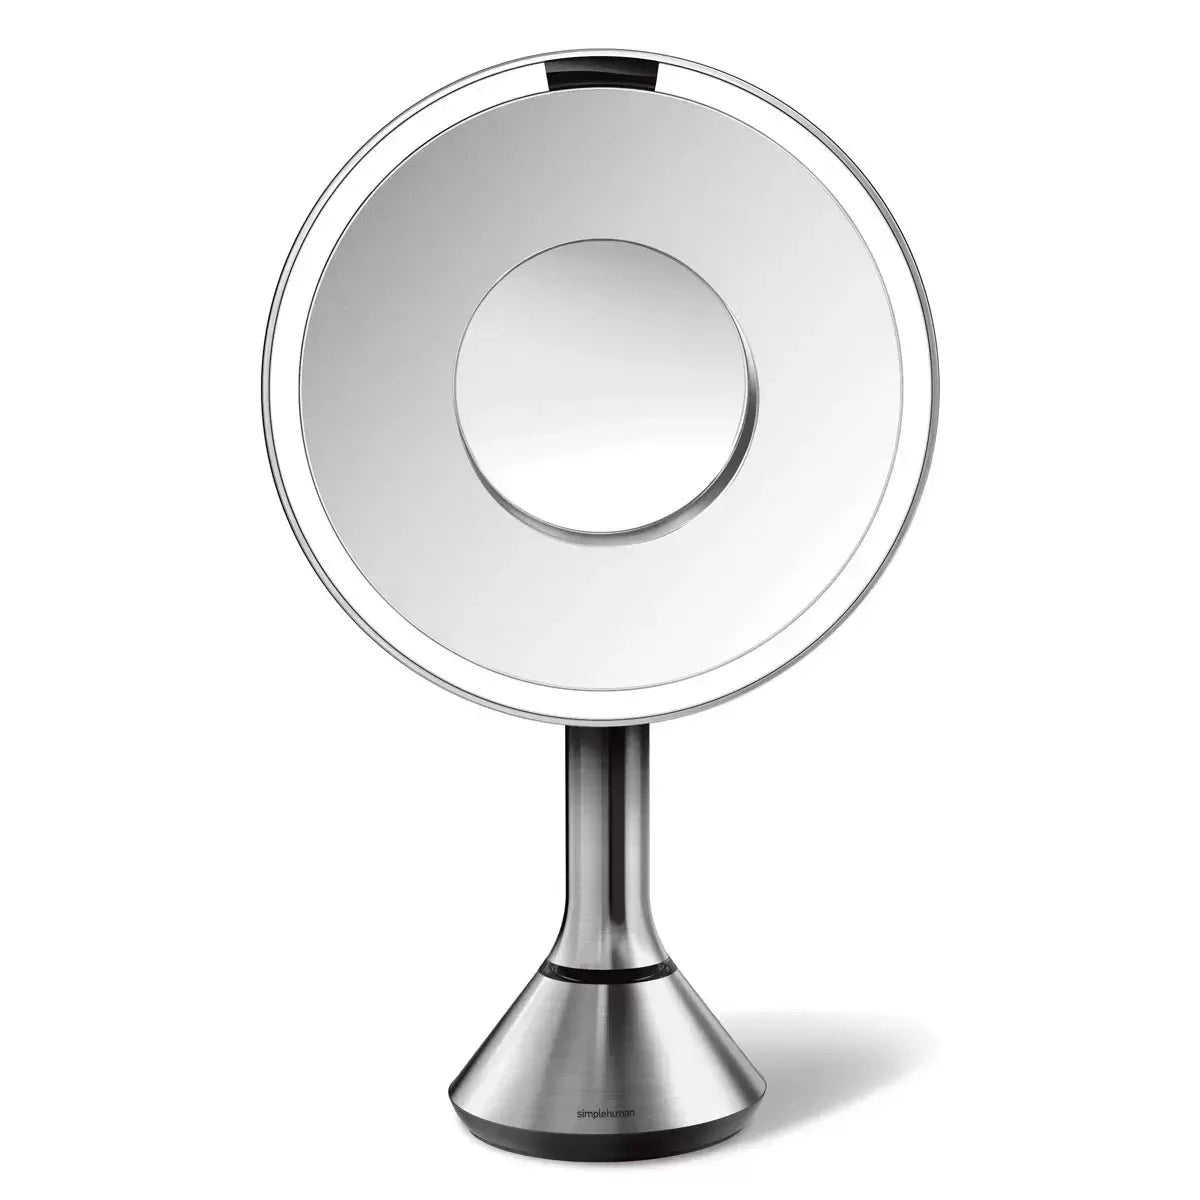 Simplehuman 8” Round Magnification Sensor Mirror (ST3200)